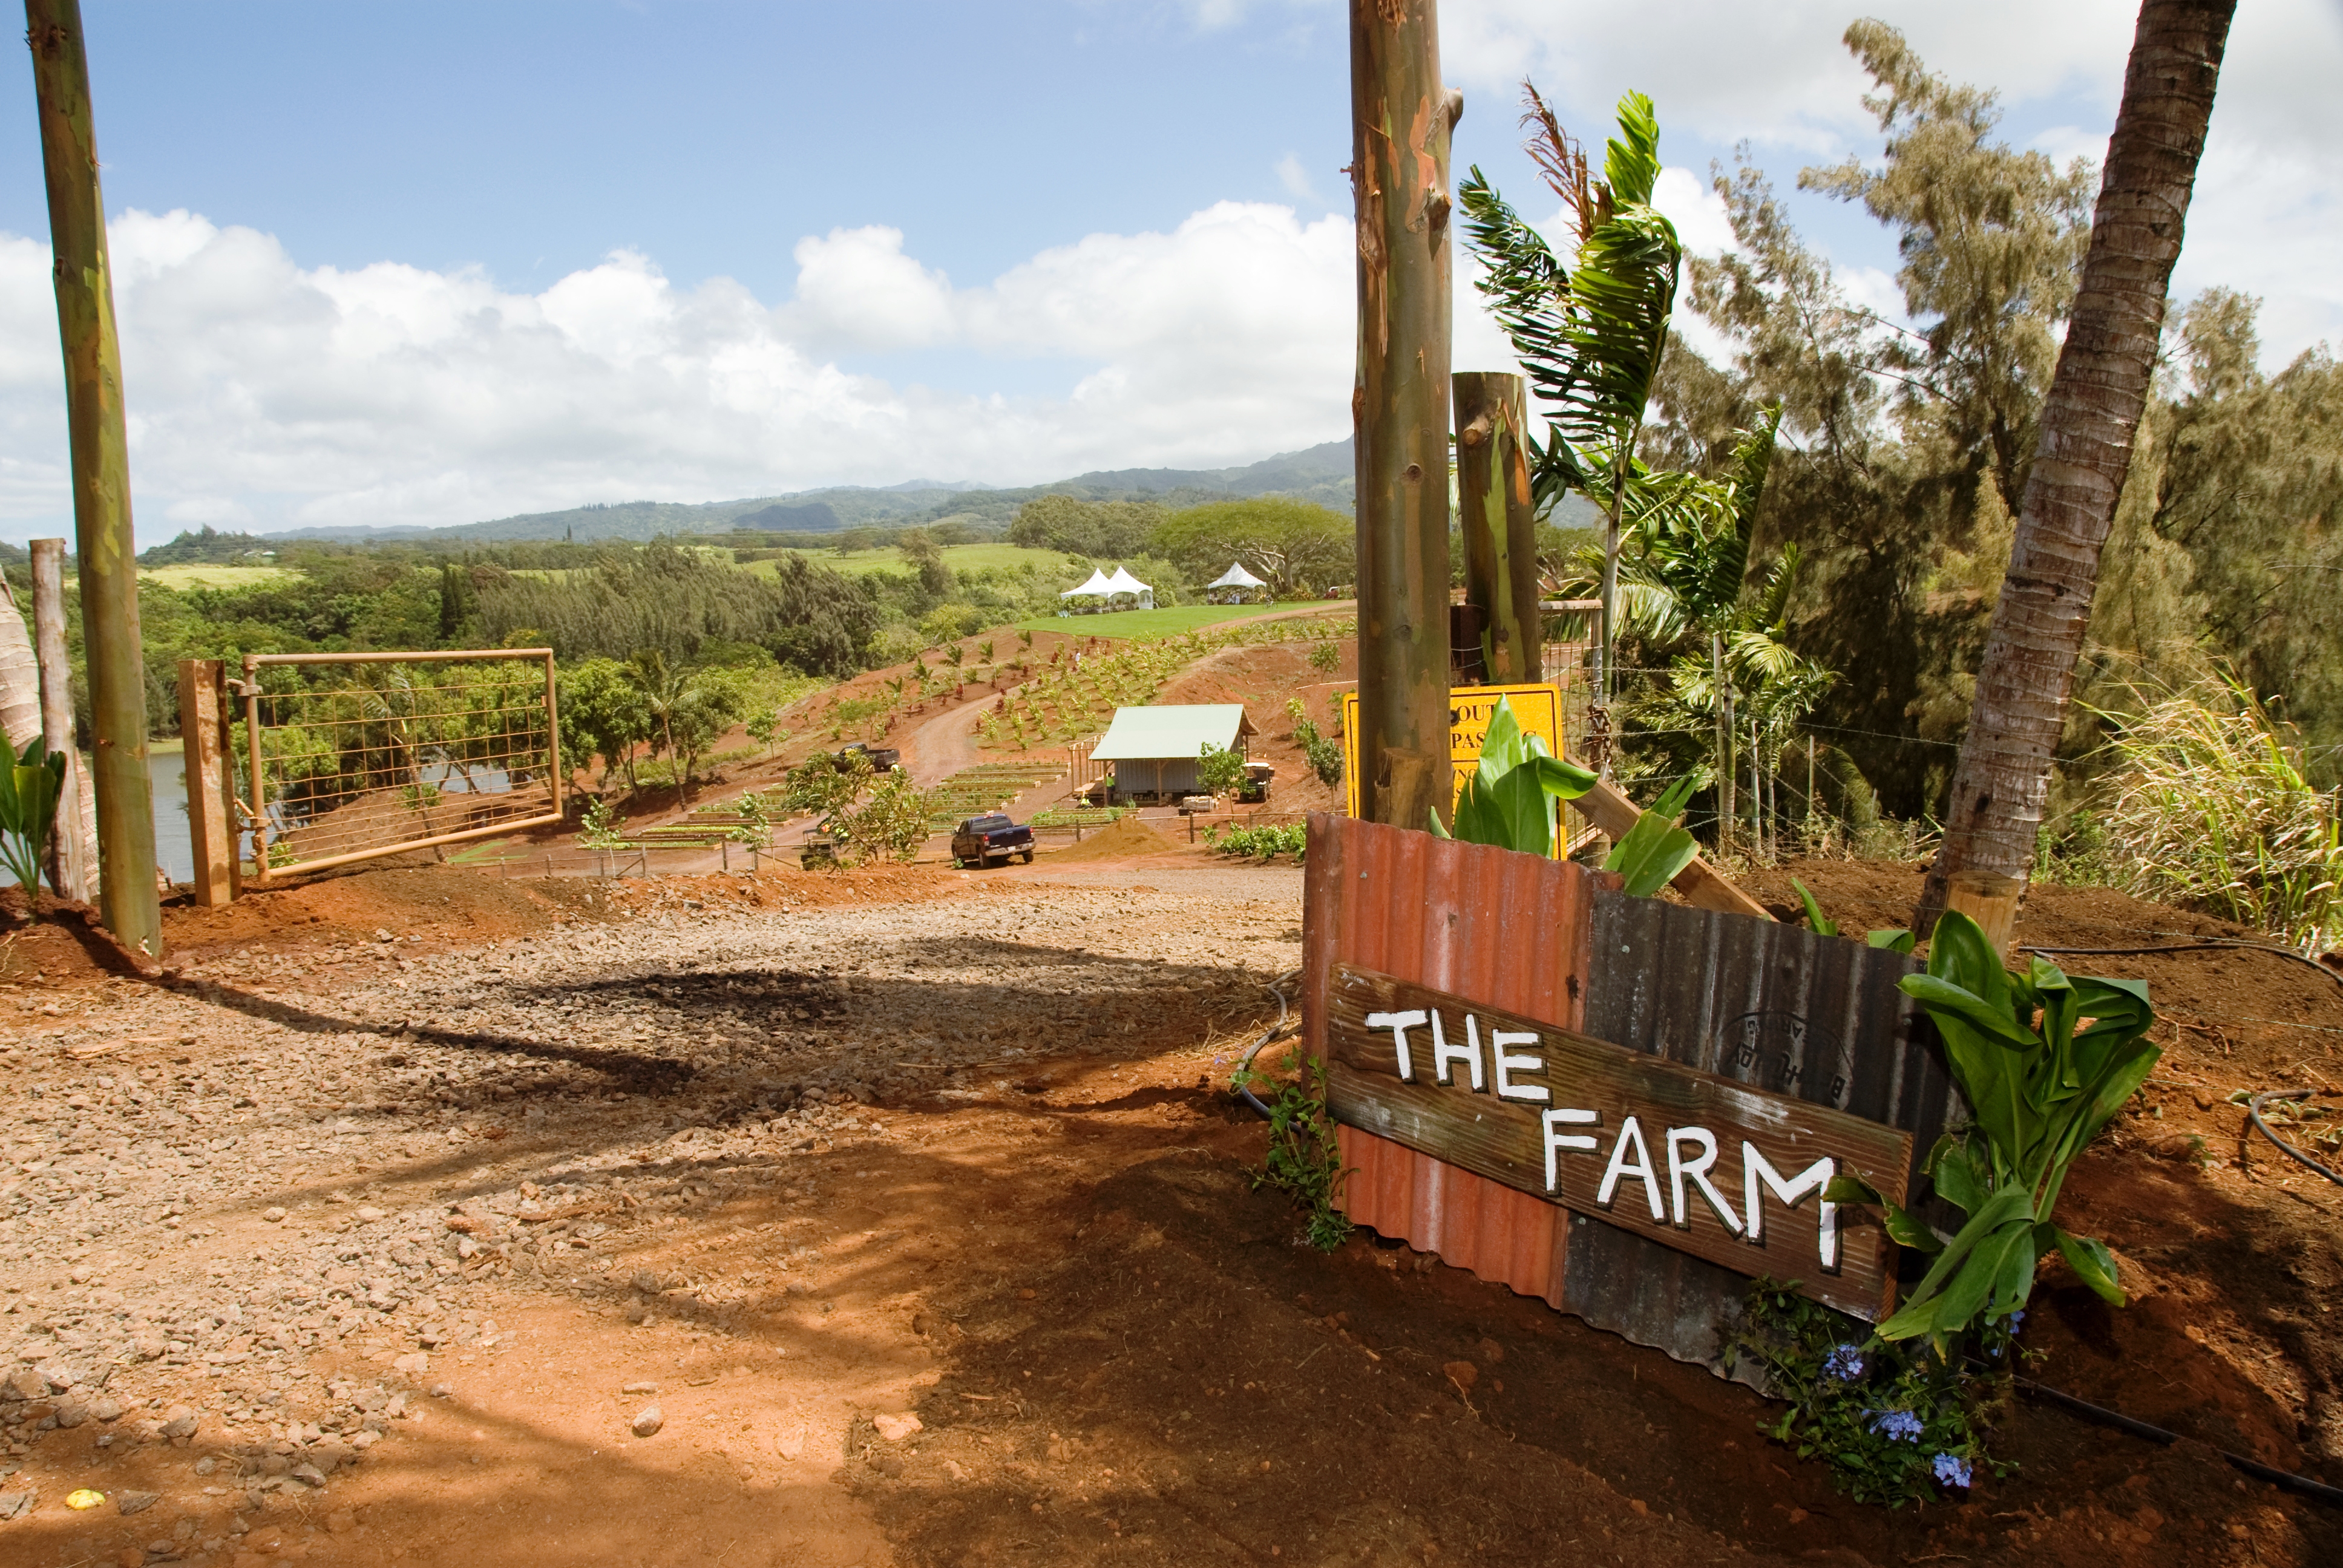 How to move to Kauai | Best Islands to live on Hawaii | Good Farming